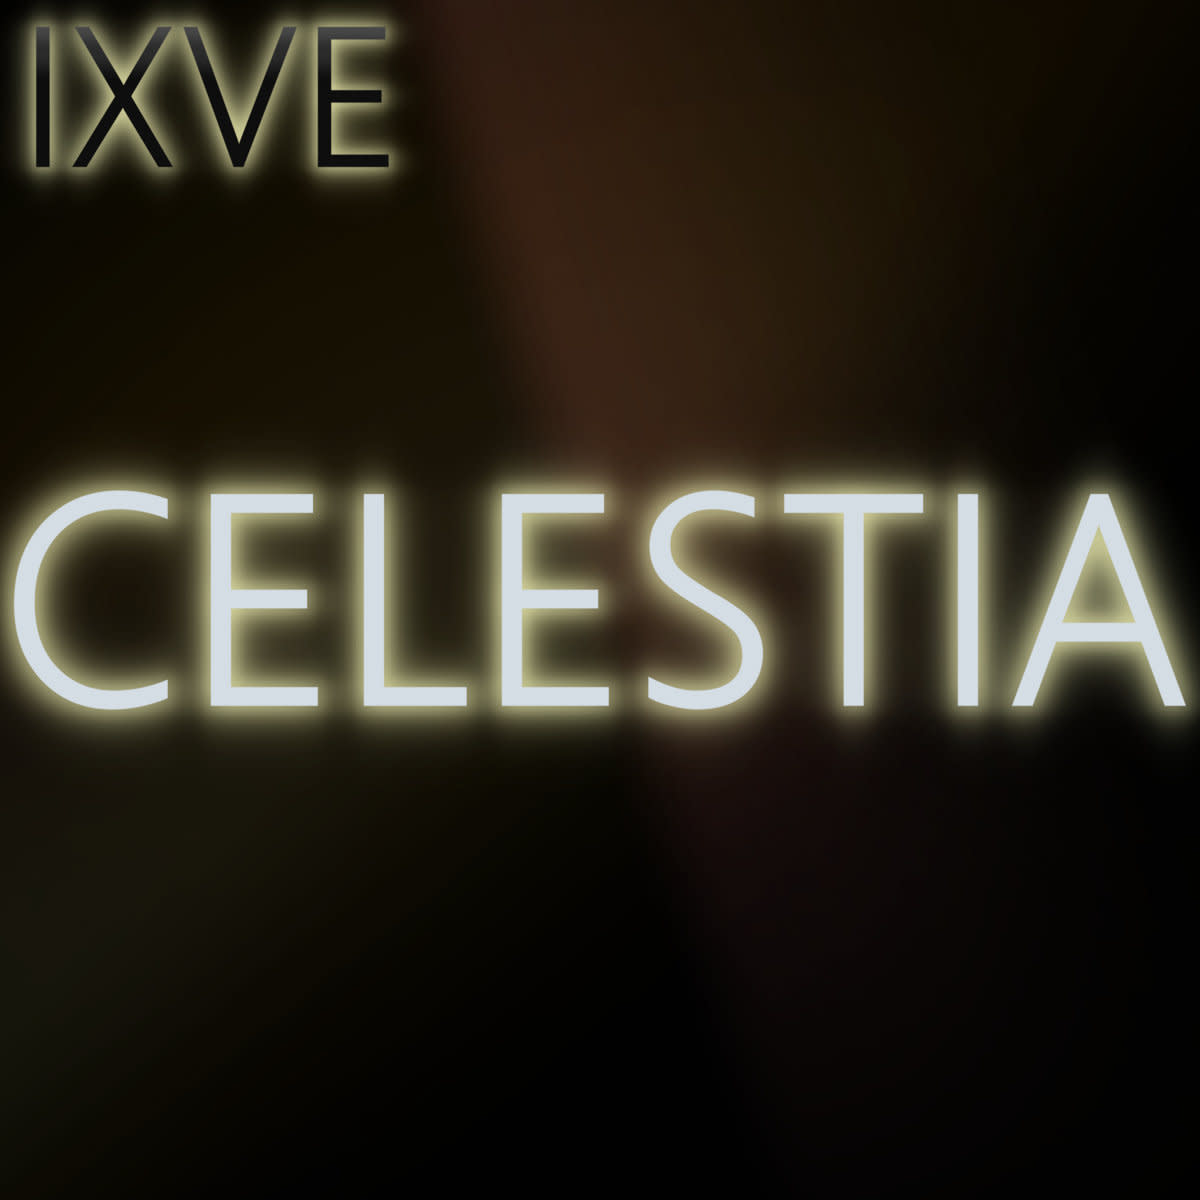 electronic-music-single-celestia-by-ixve